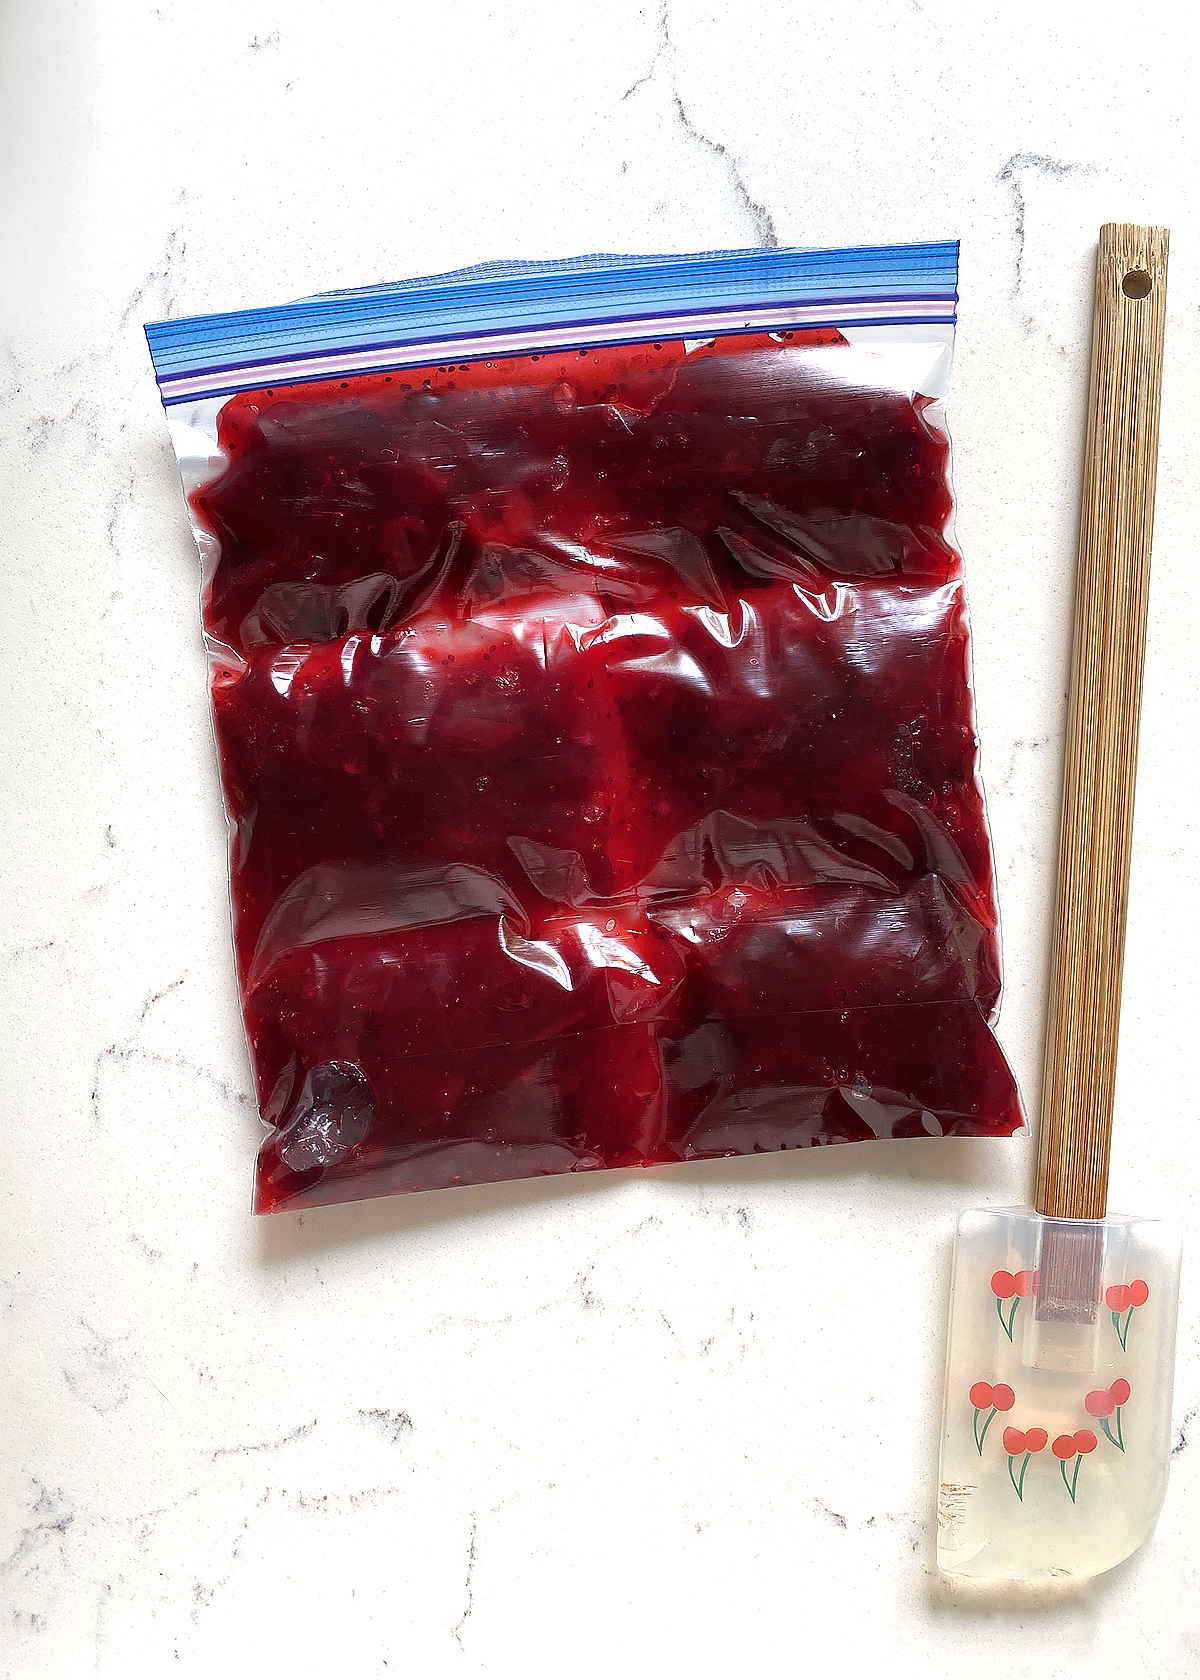 freeze leftover cranberry sauce in plastic bag